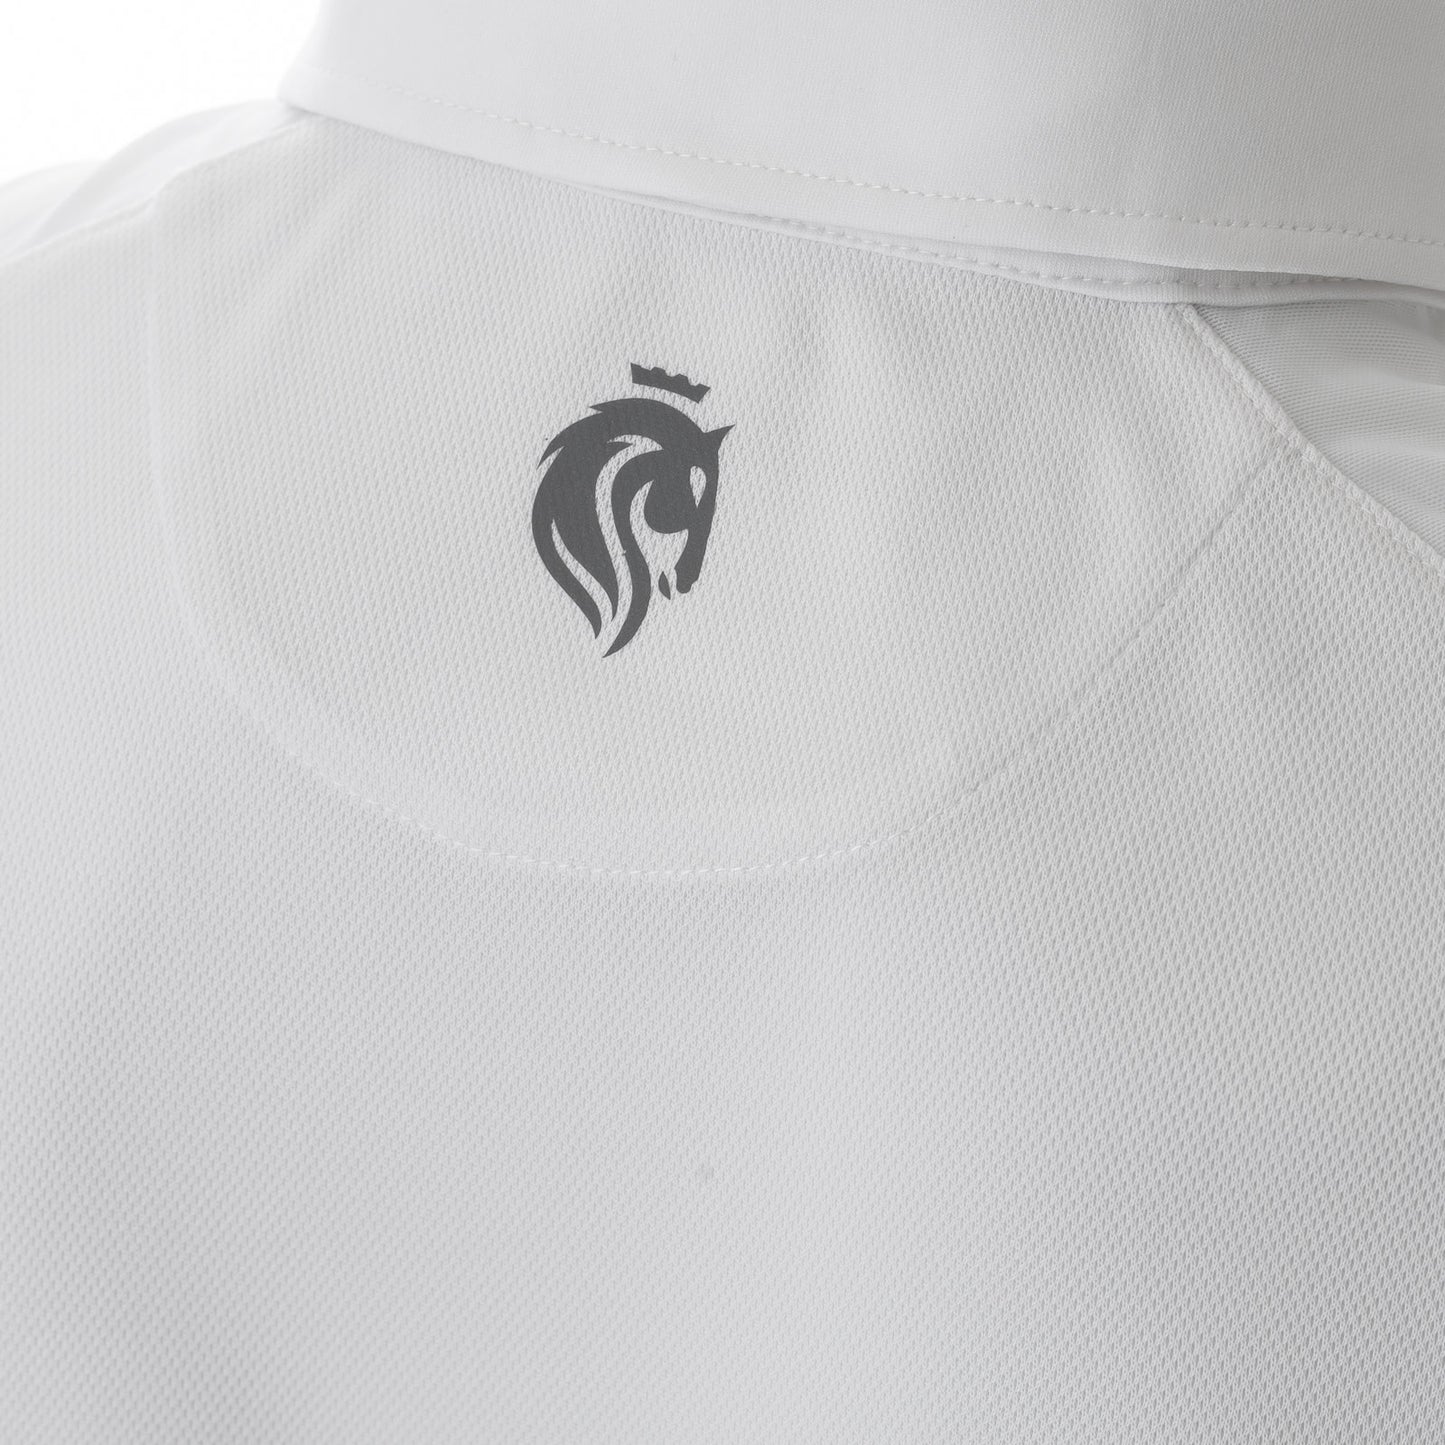 Camiseta Polo de Concurso Equinavia para Hombre - Blanca